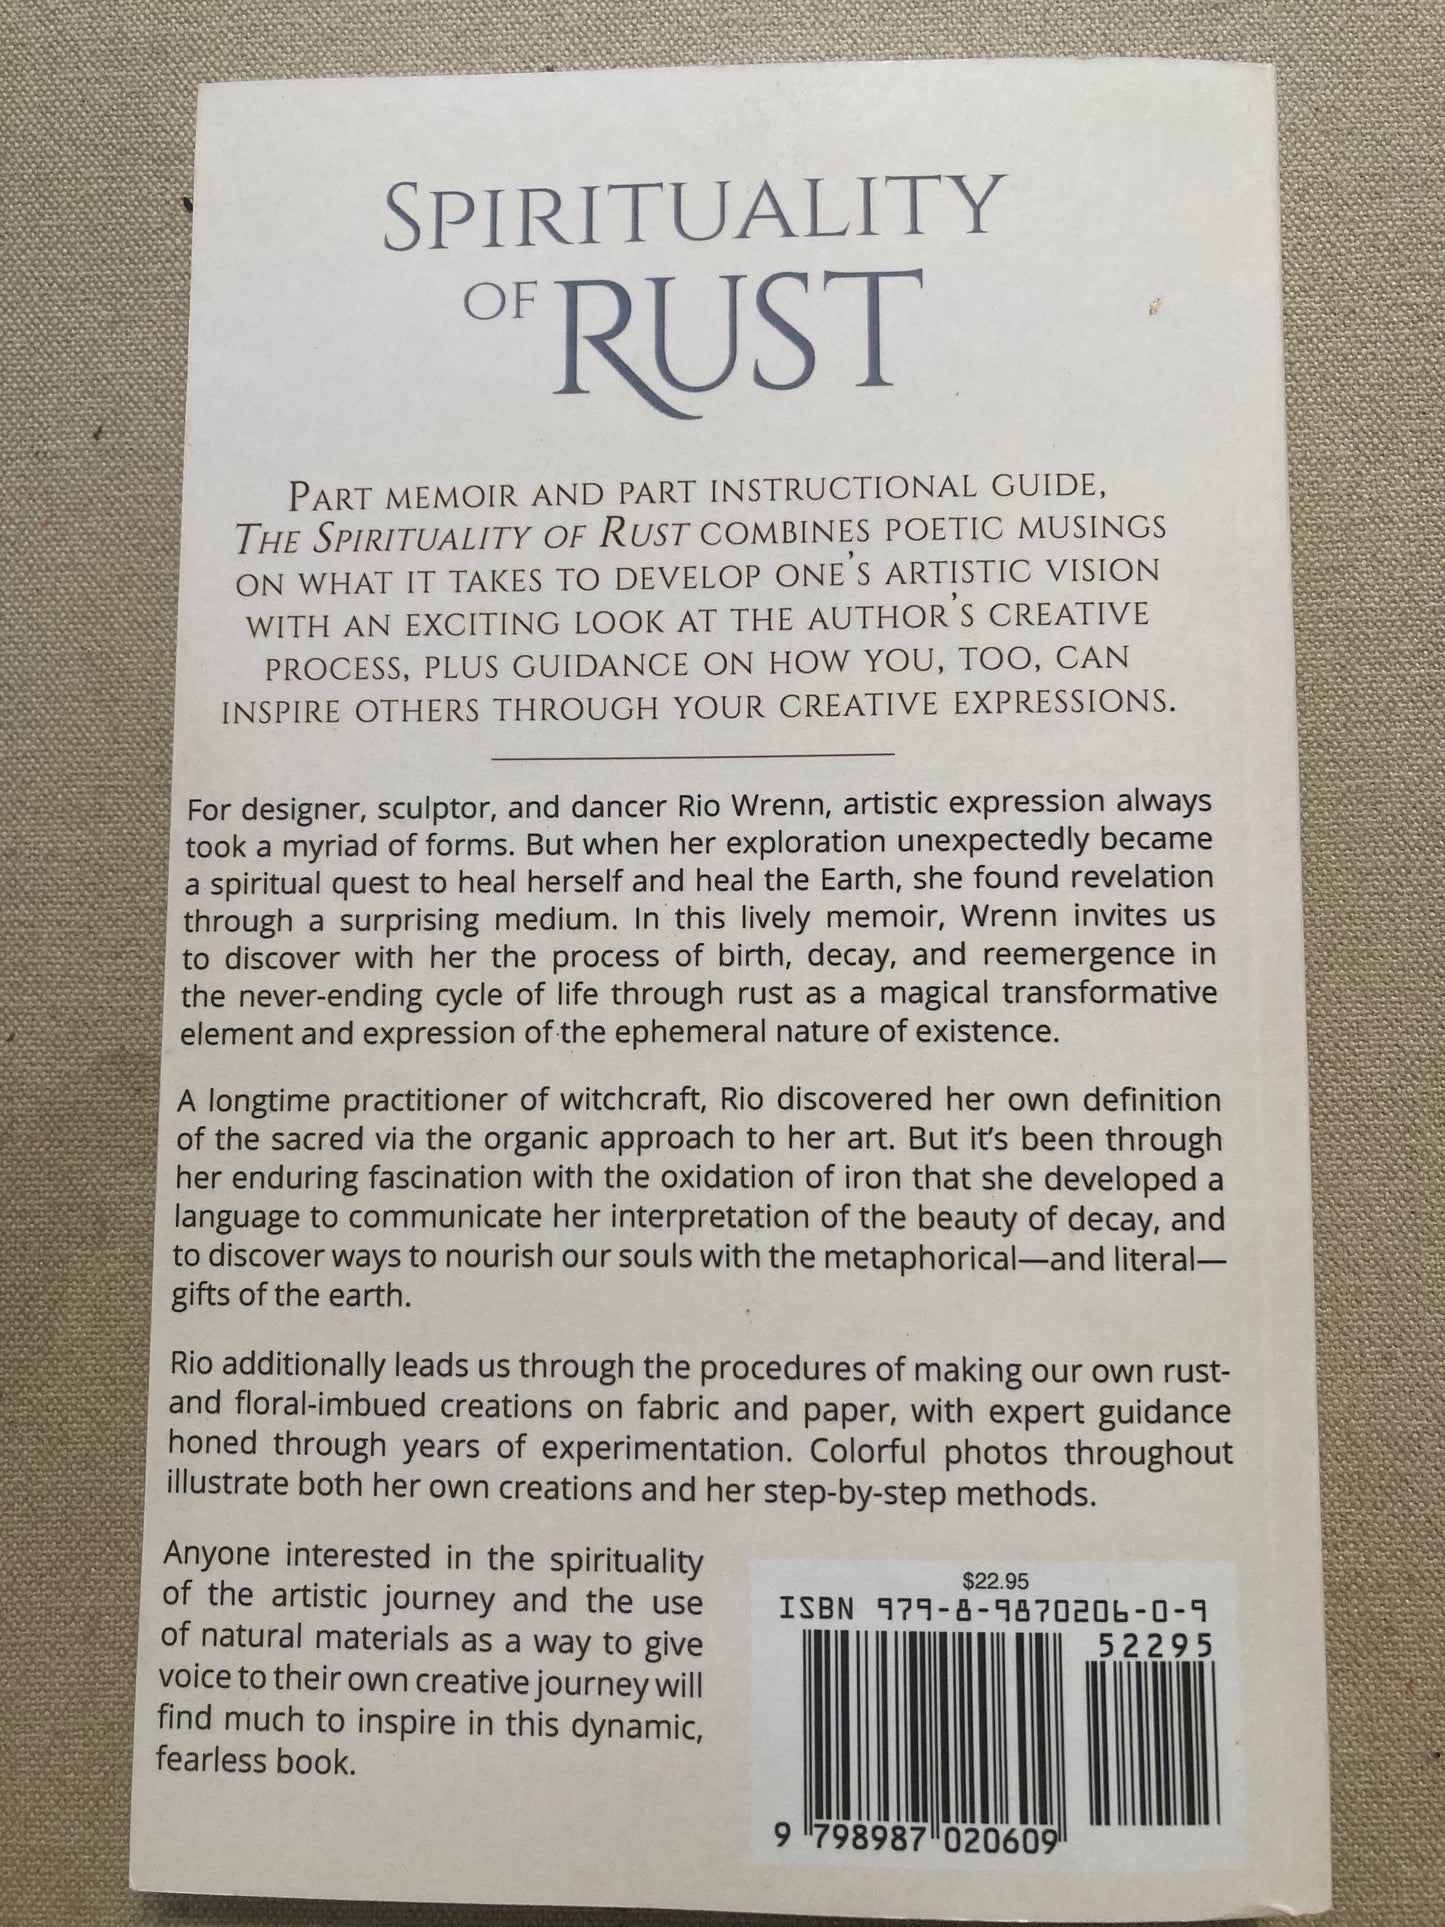 Spirituality of Rust - A Sacred Language of Iron Through Art